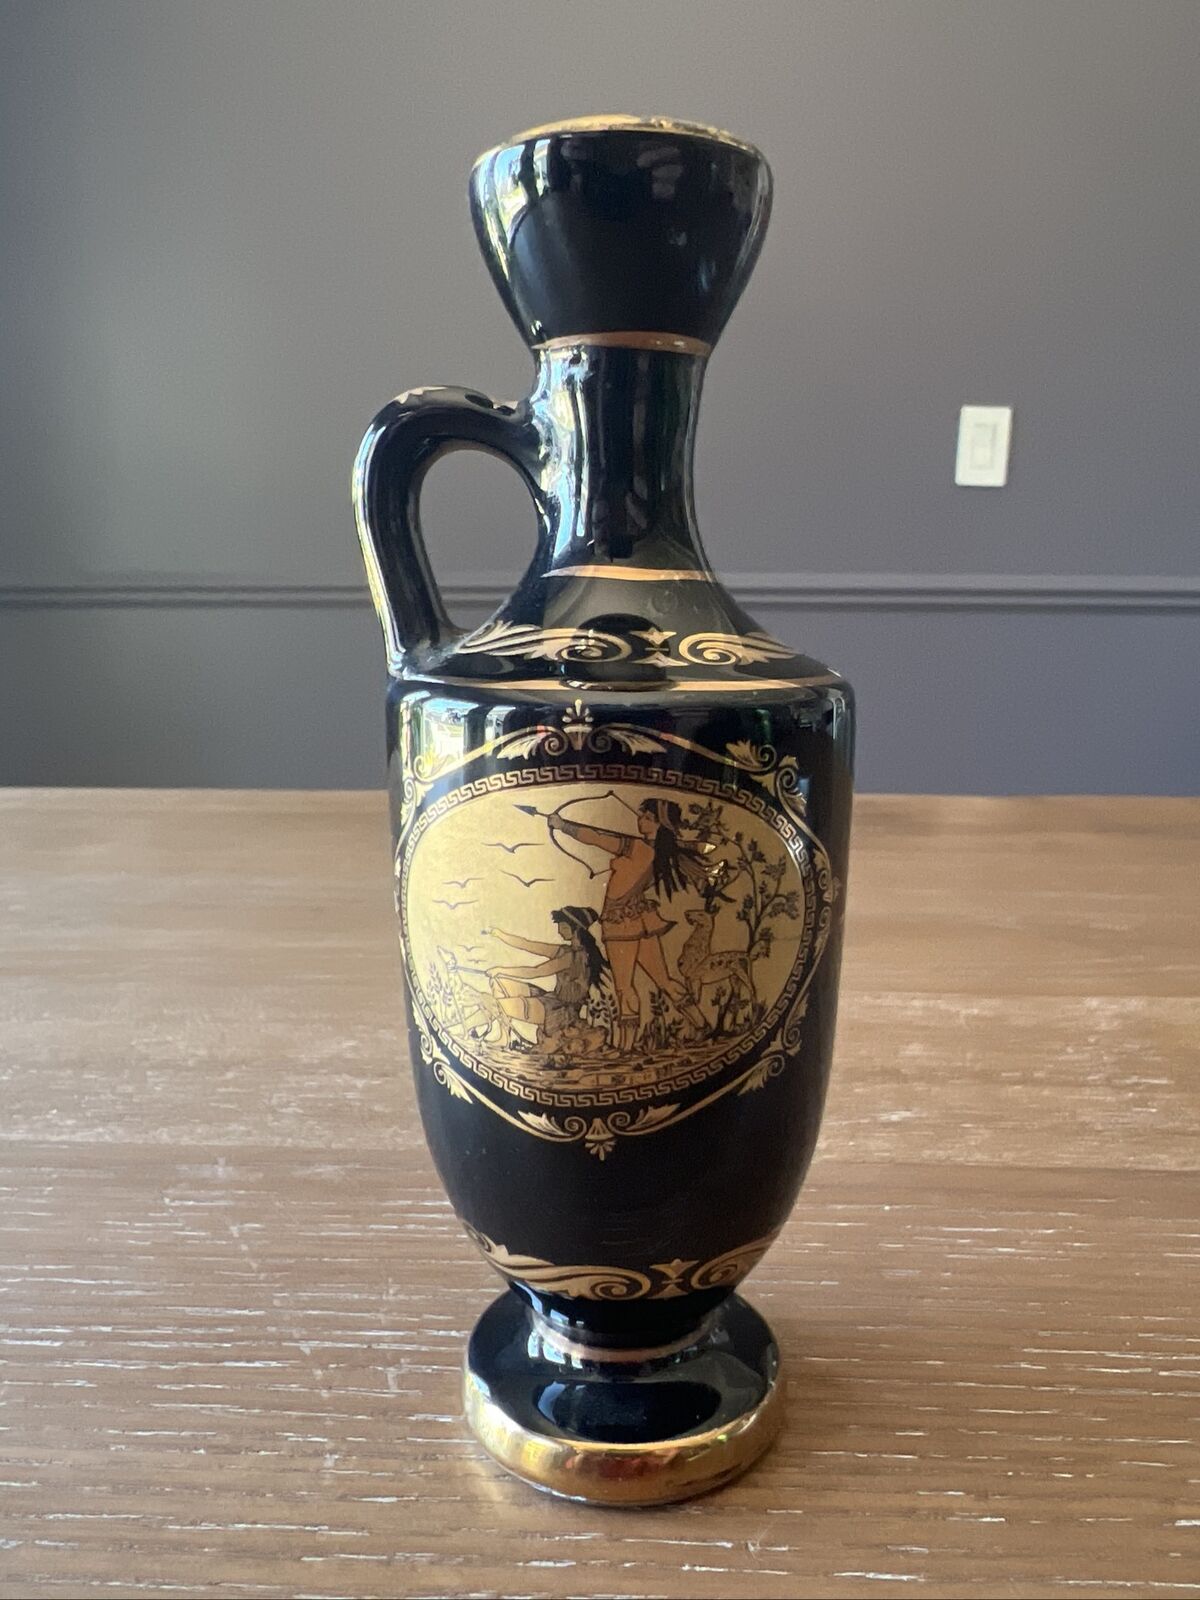 Stunning Vintage ADIS Black & 24K Gold Bud Vase from Greece Handmade Archery Art